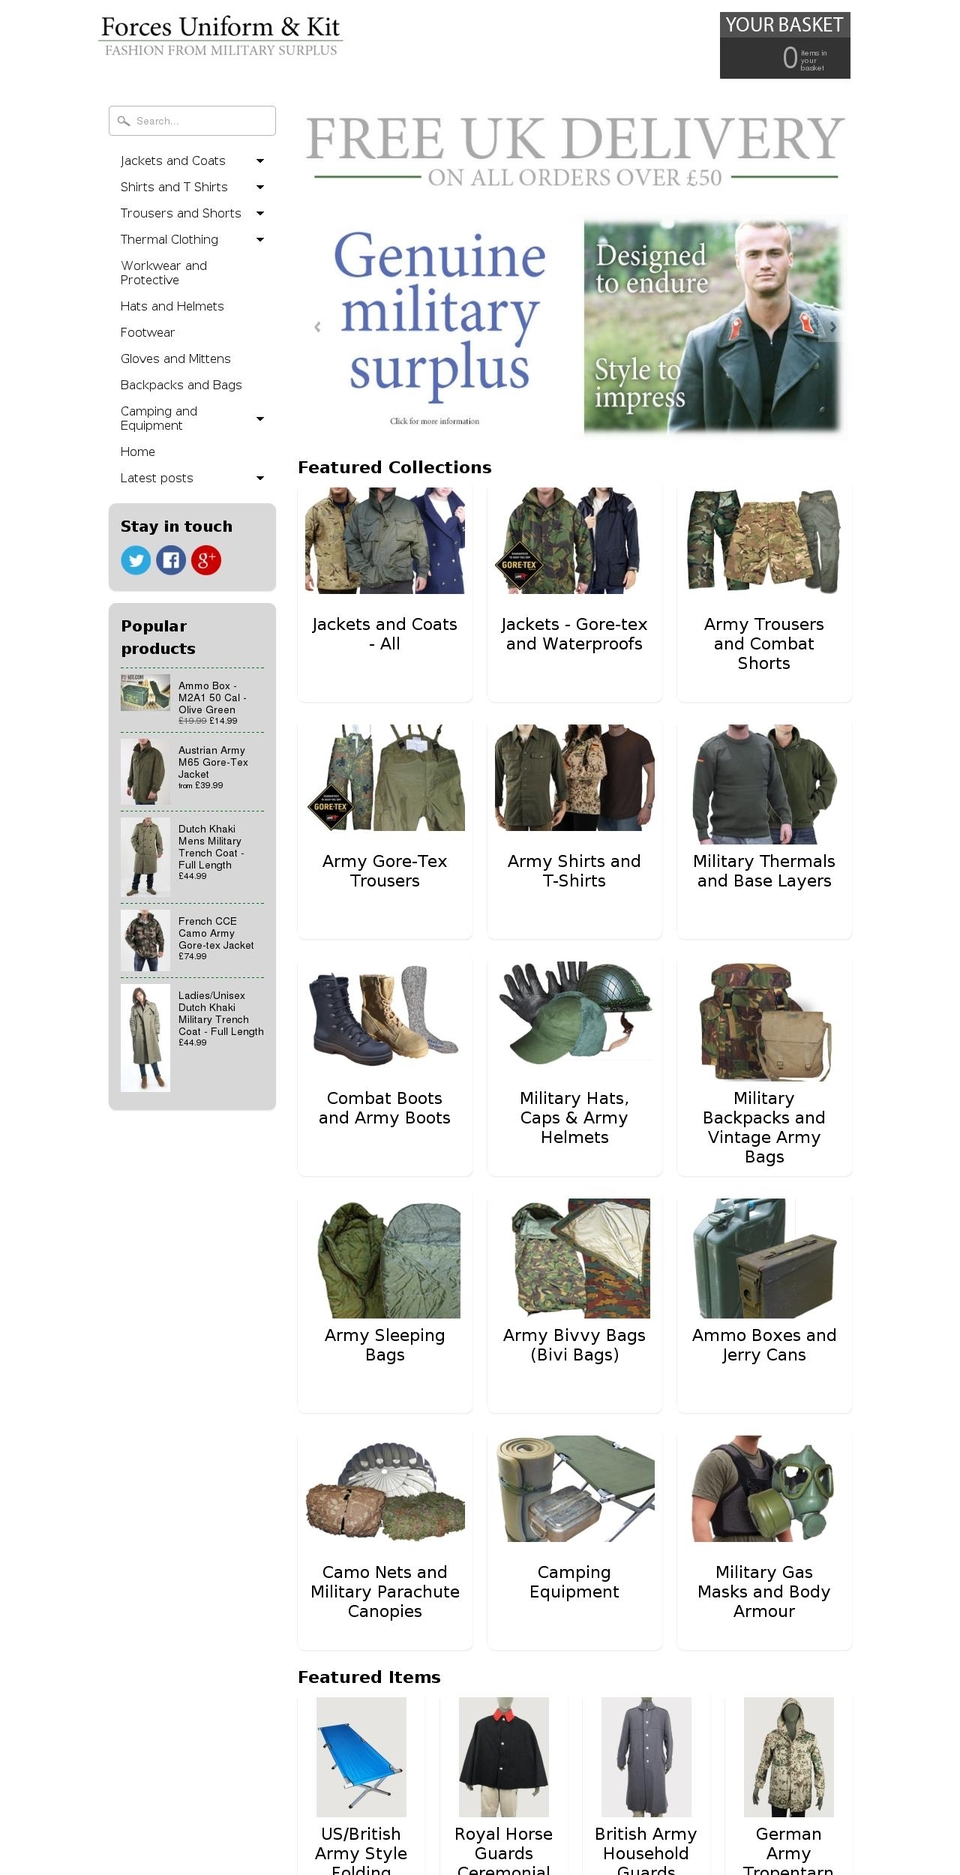 forcesuniformandkit.co.uk shopify website screenshot